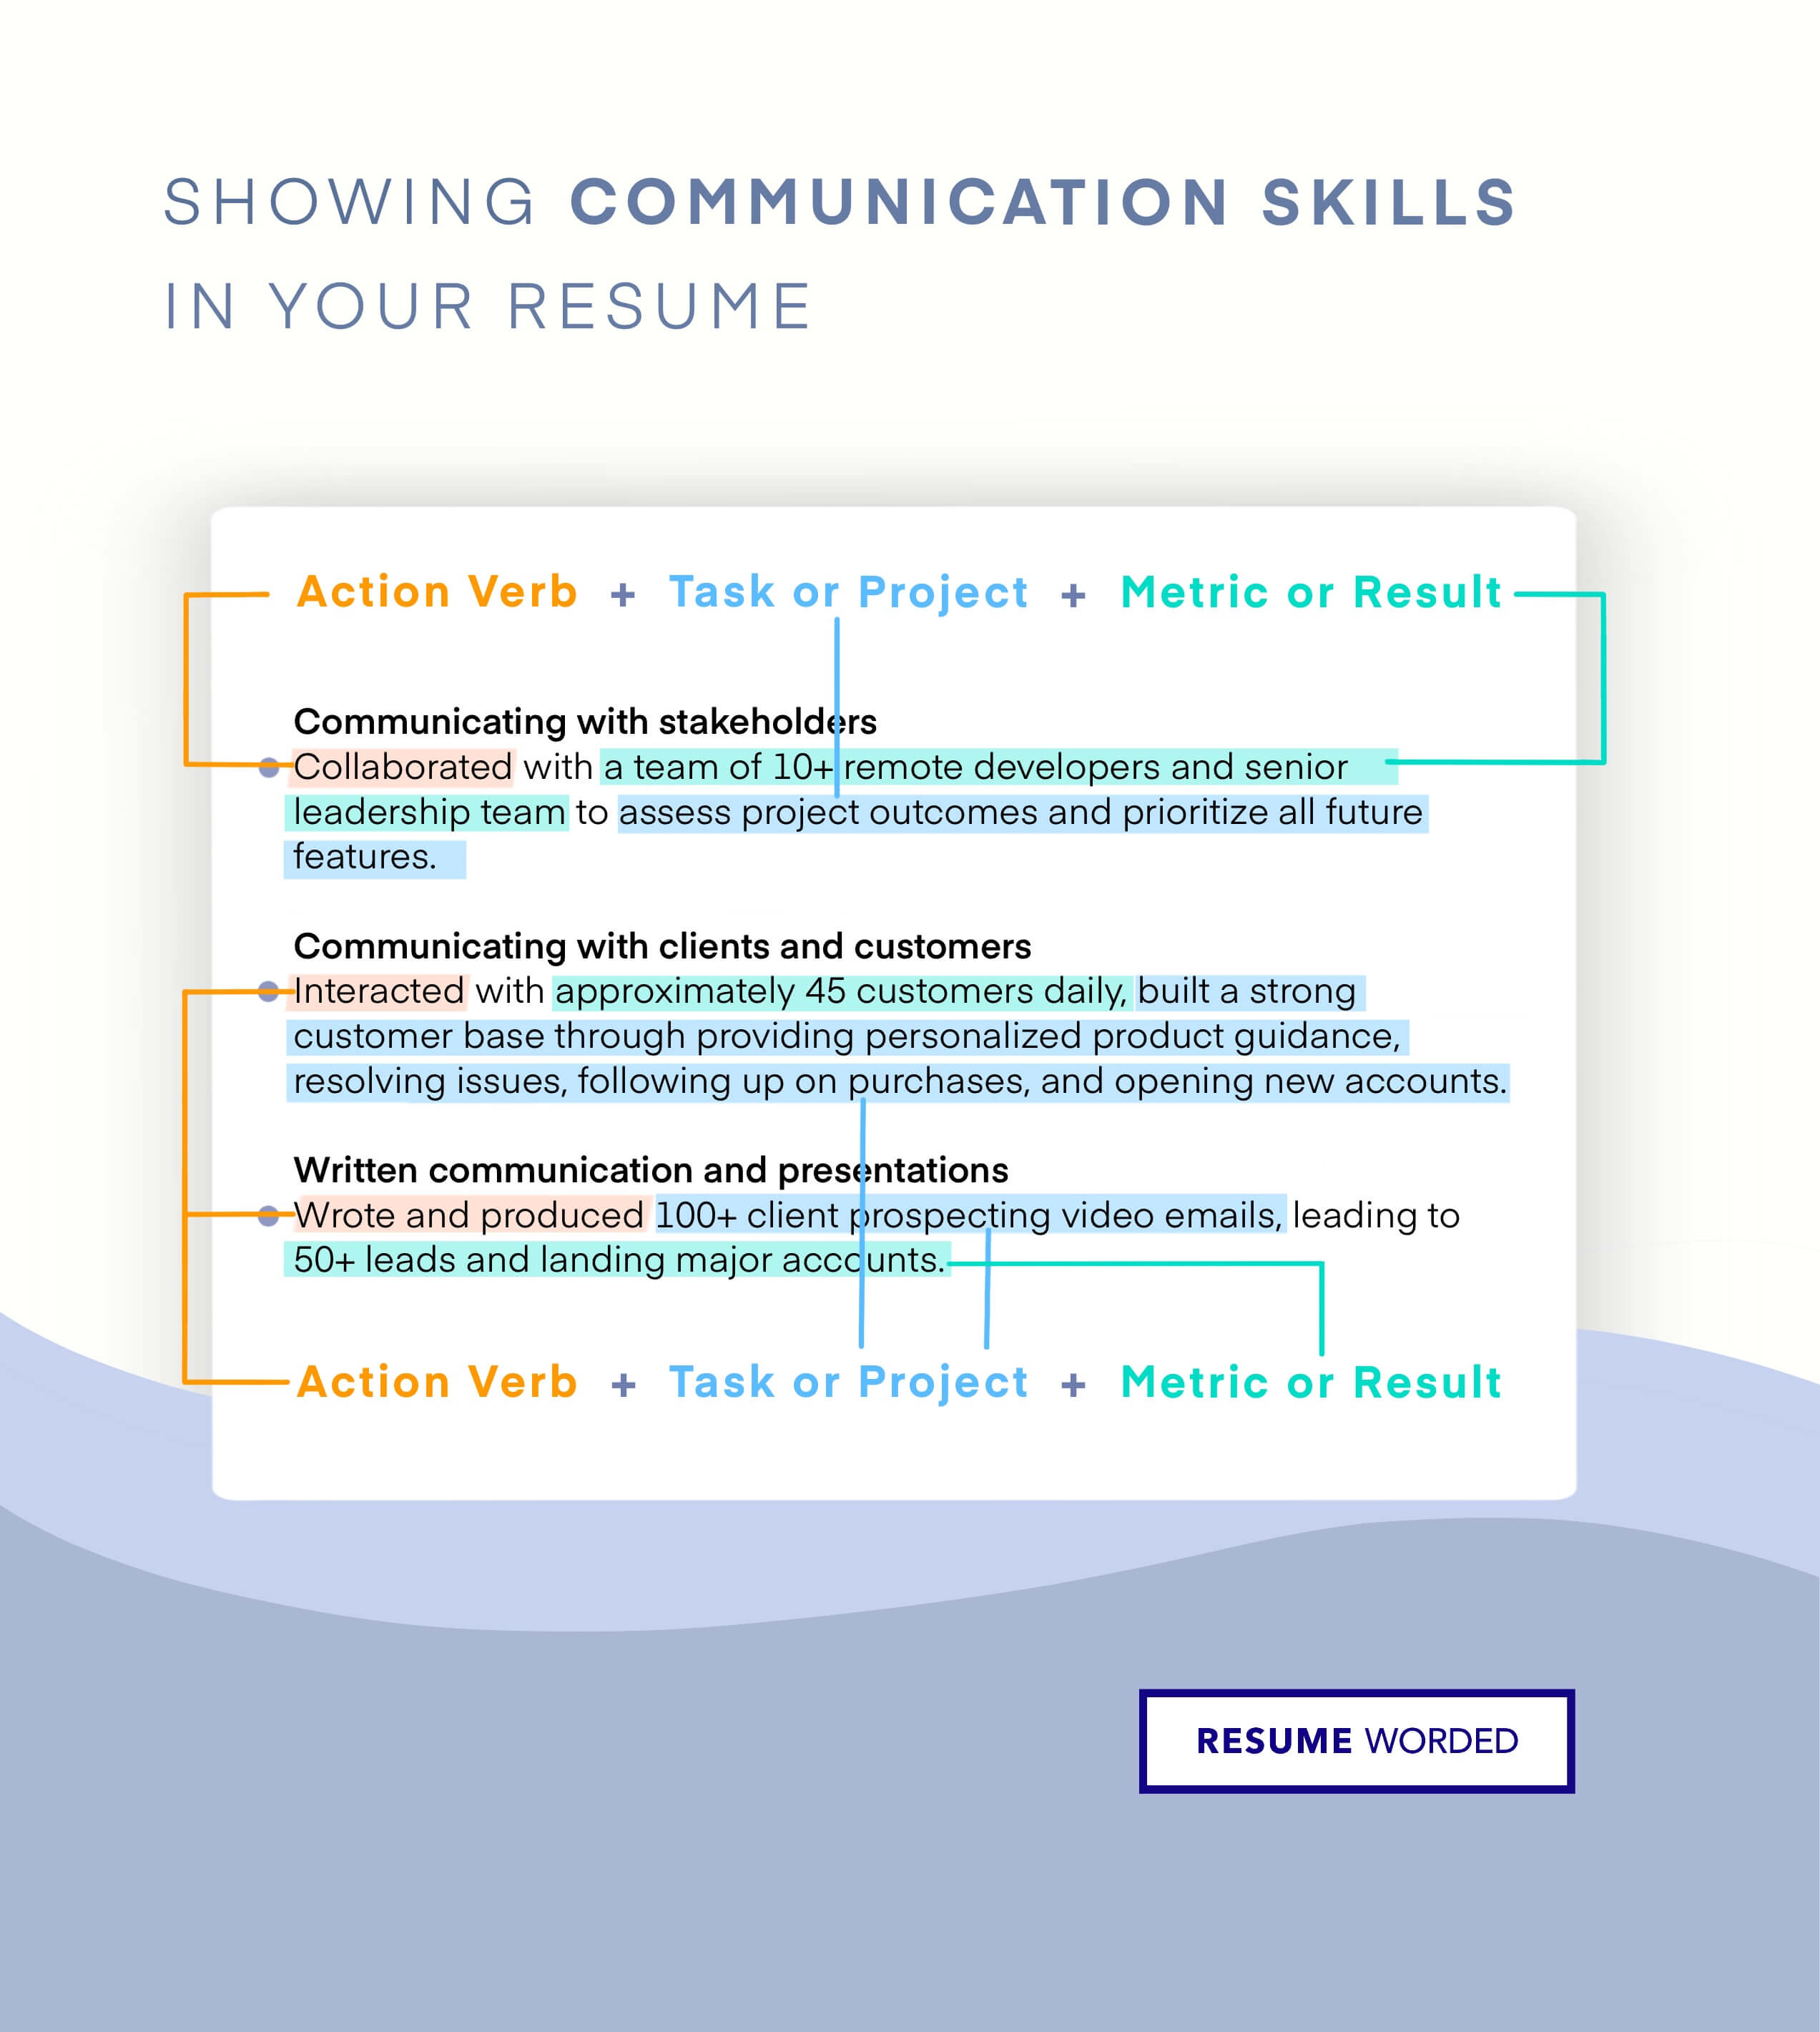 Showcase your digital communication skills - Inside Sales Associate CV